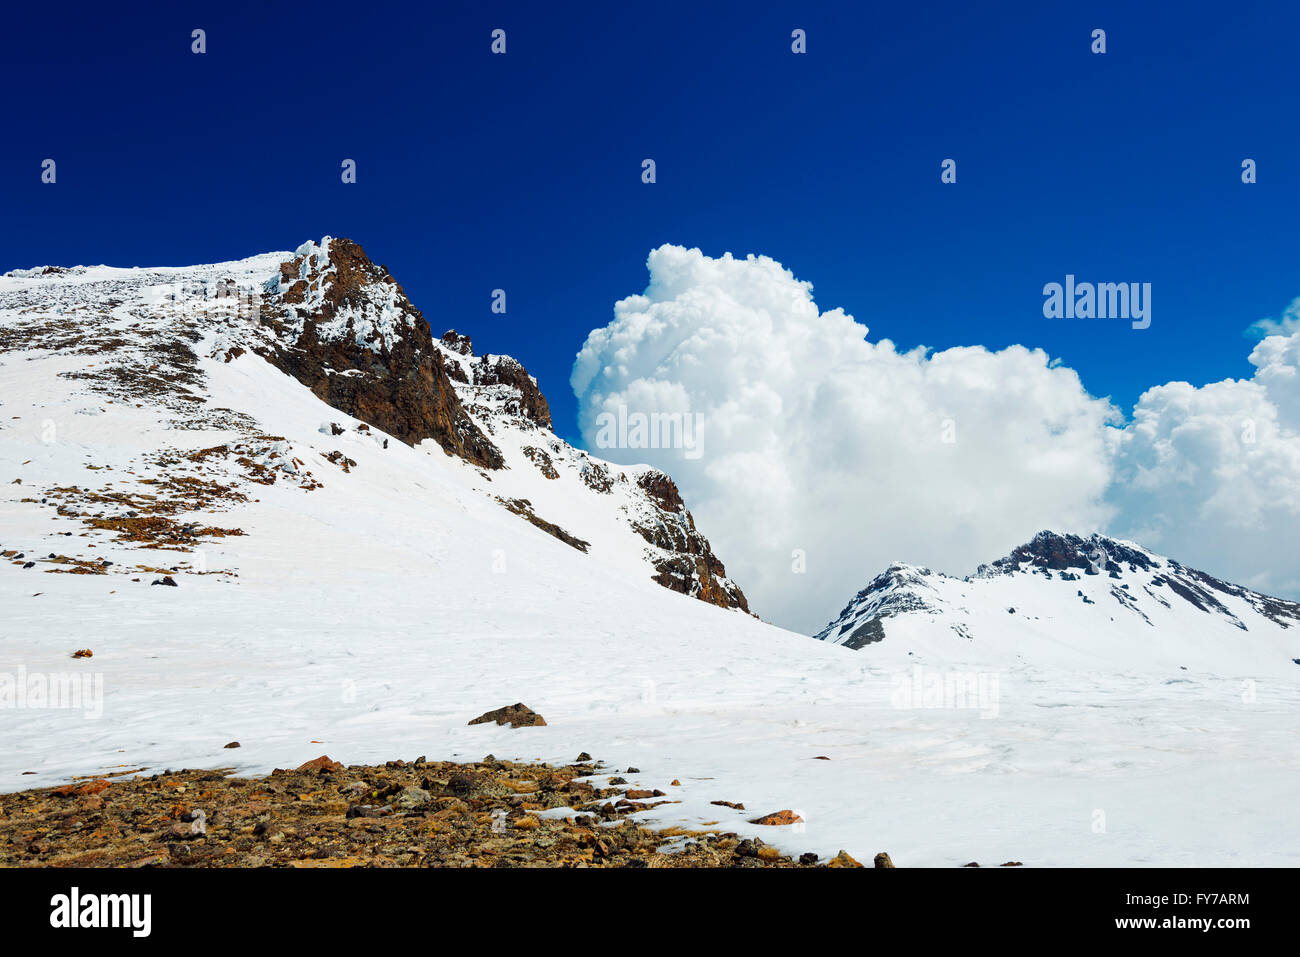 Eurasia, Caucasus region, Armenia, Aragatsotn province, scenery on the slopes of Mount Aragats (4090m) highest mountain in Armen Stock Photo